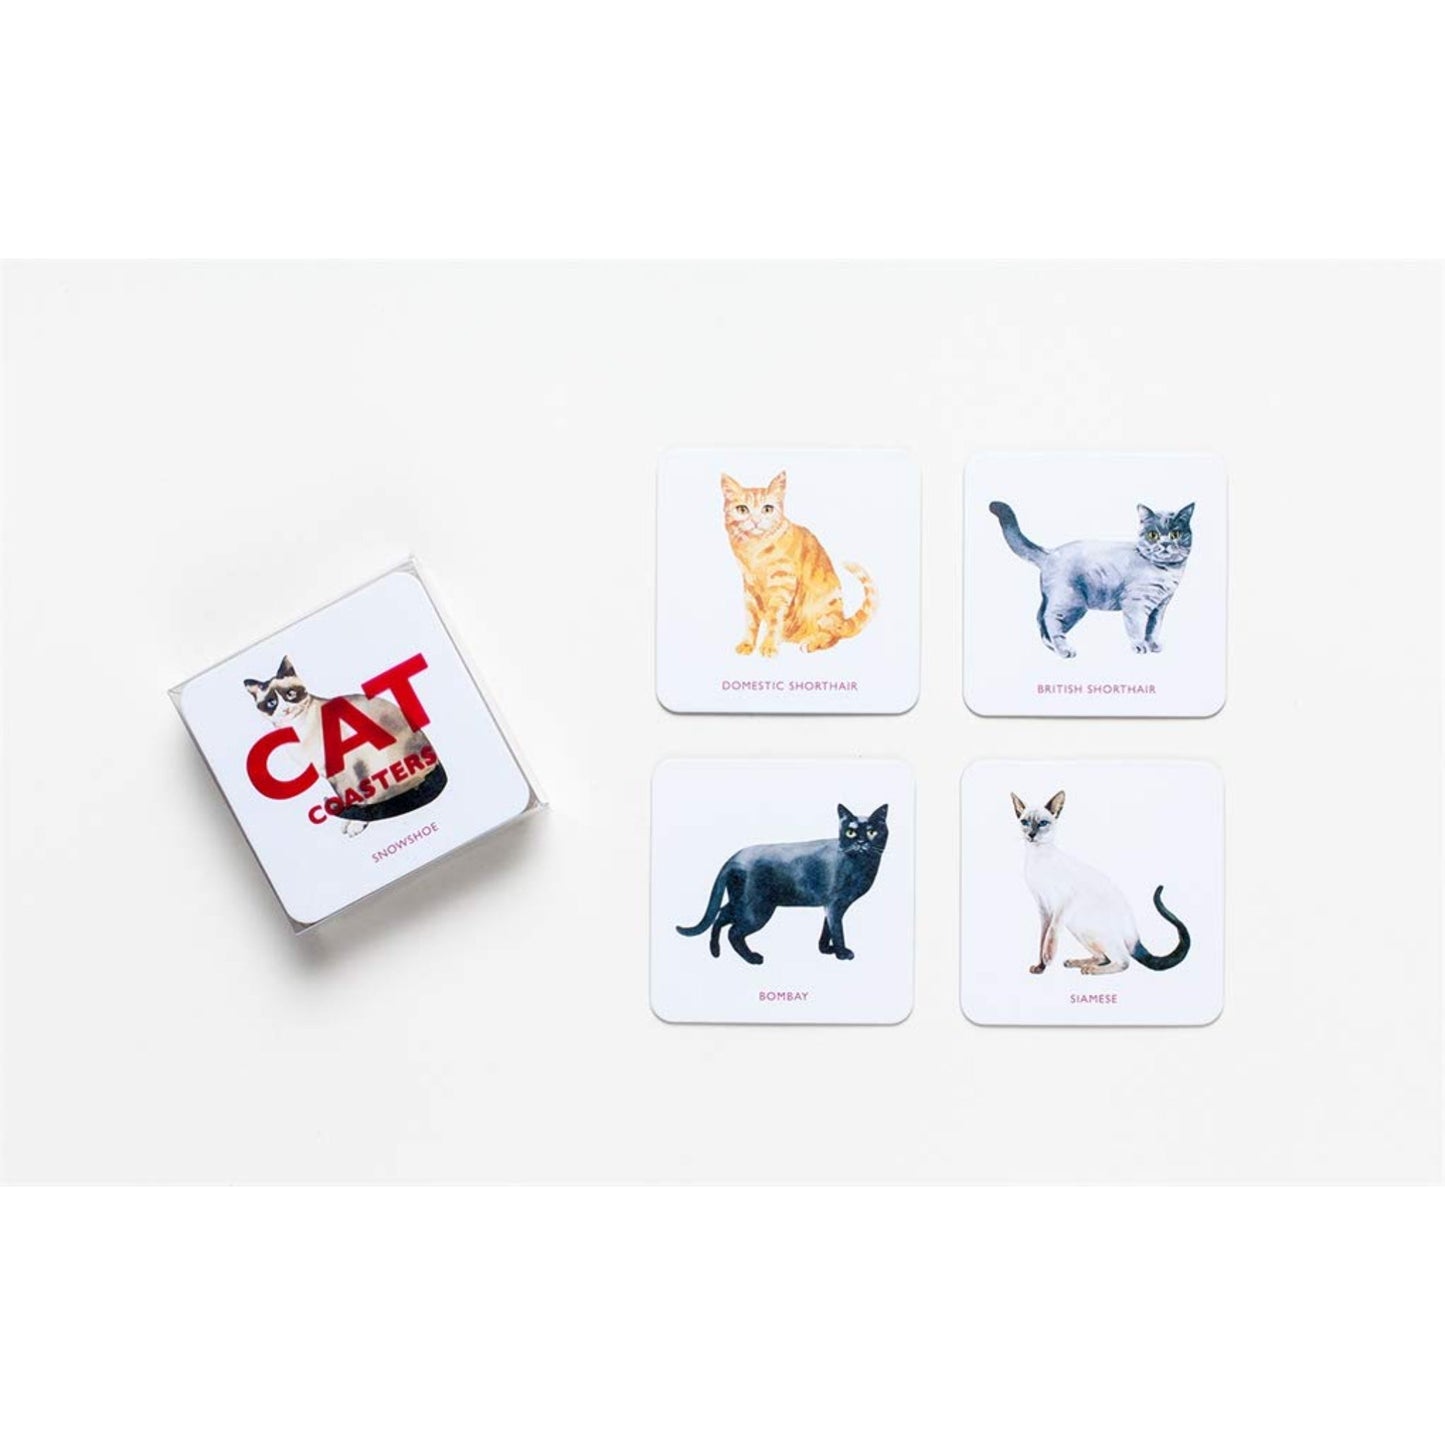 Cat Coasters - Tiny Tiger Gift Shop